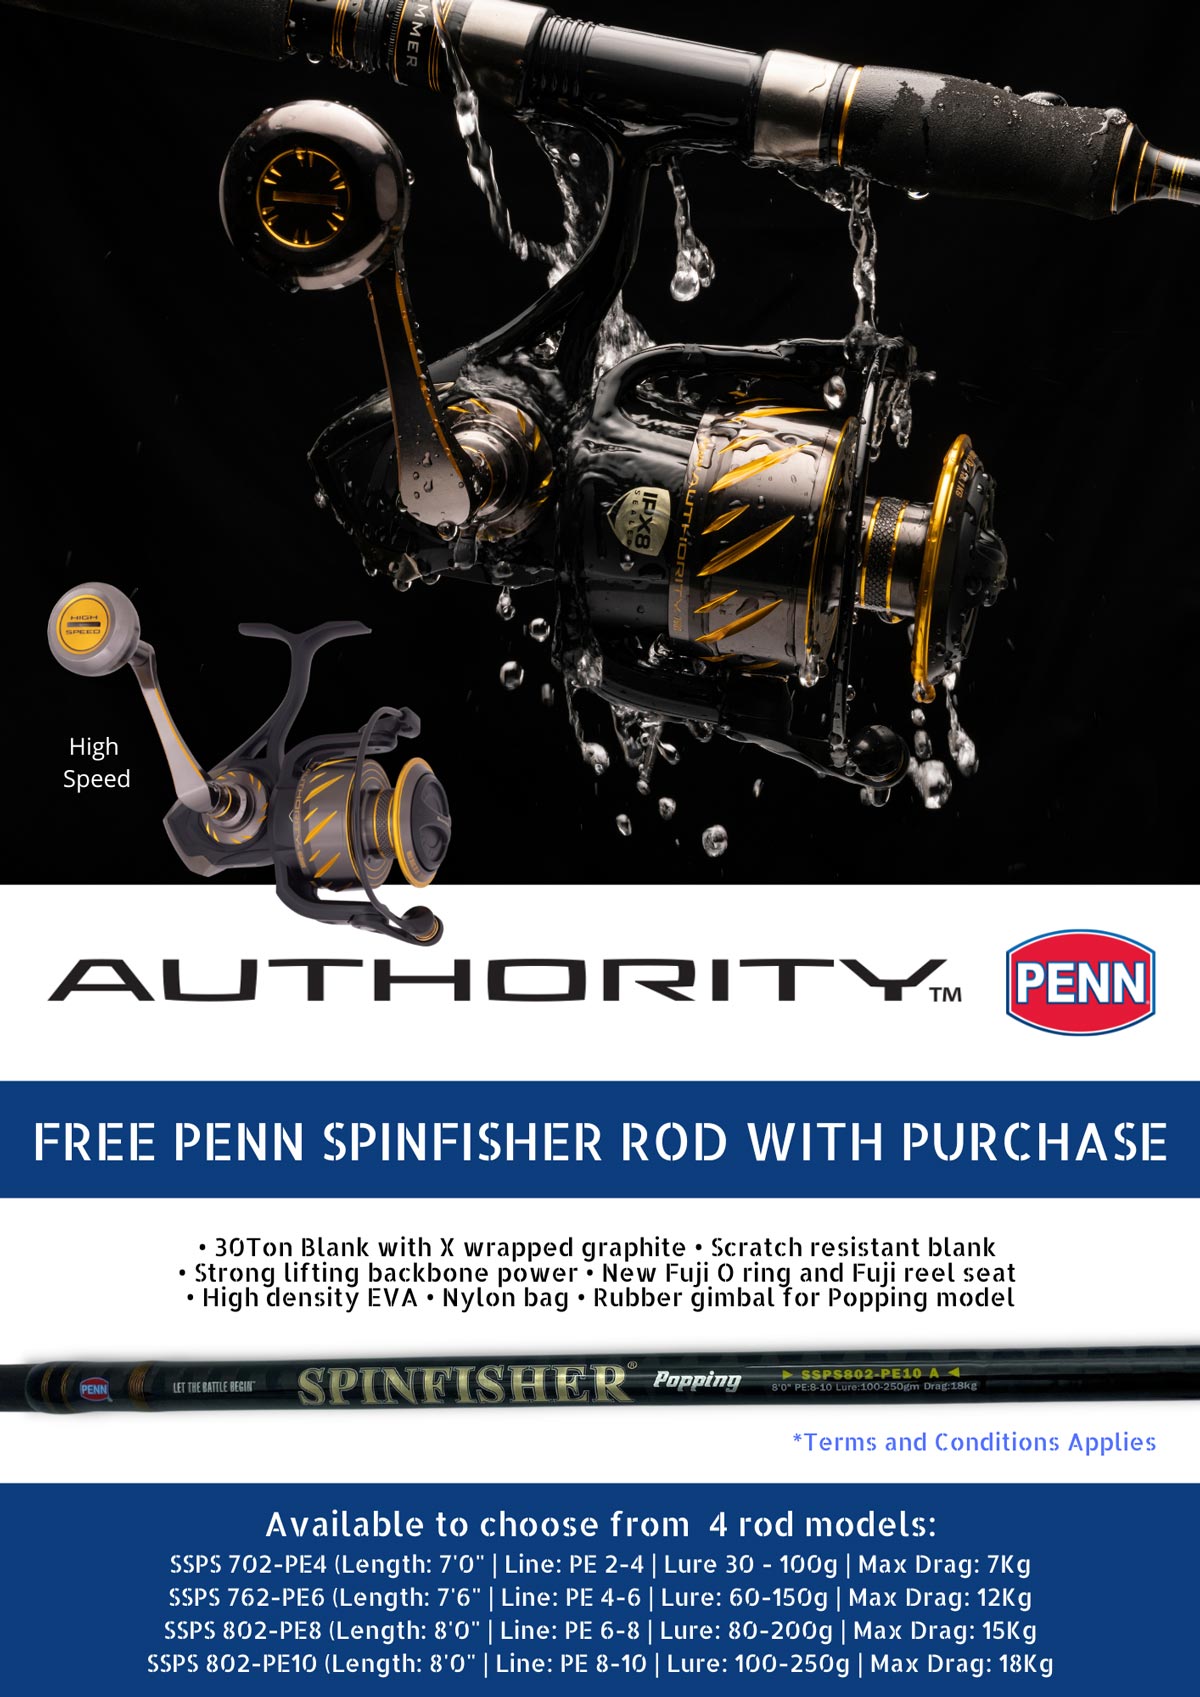 Penn Authority reel, Penn Authority reel Malaysia, Penn Authority Singapore, Penn Authority reel review